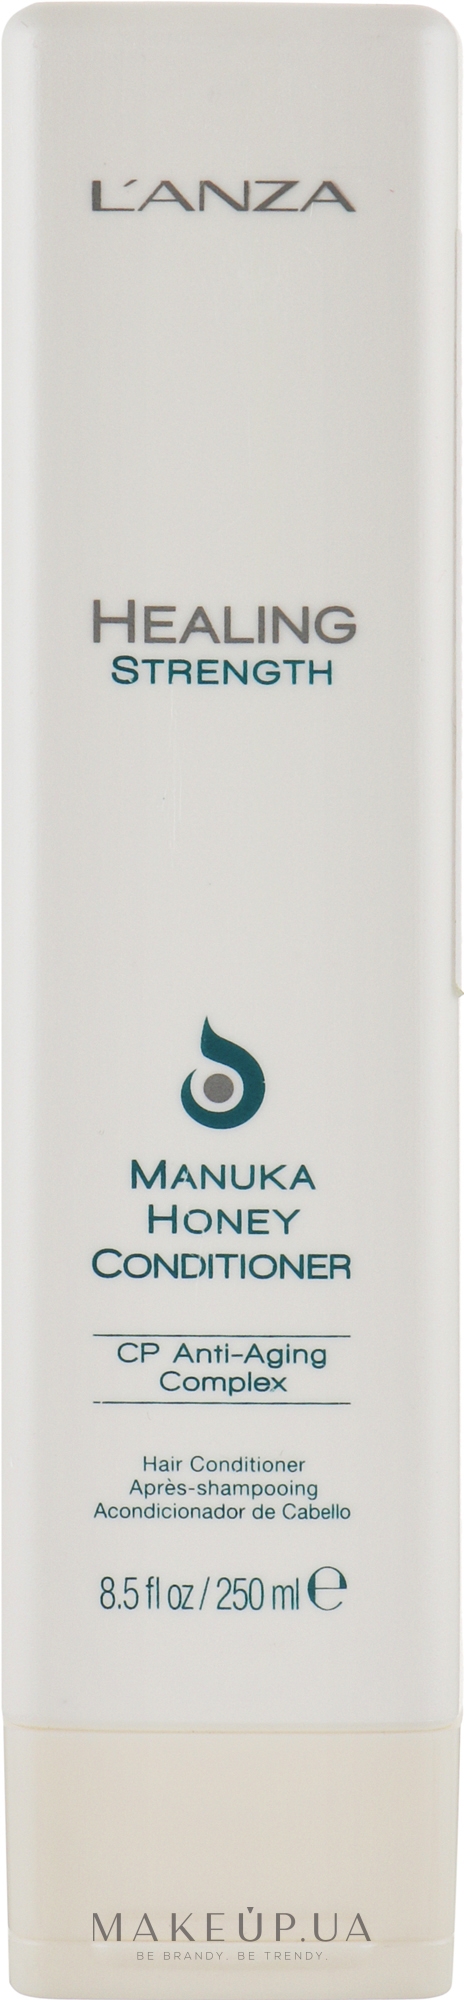 Укрепляющий кондиционер - L'anza Healing Strength Manuka Honey Conditioner — фото 250ml